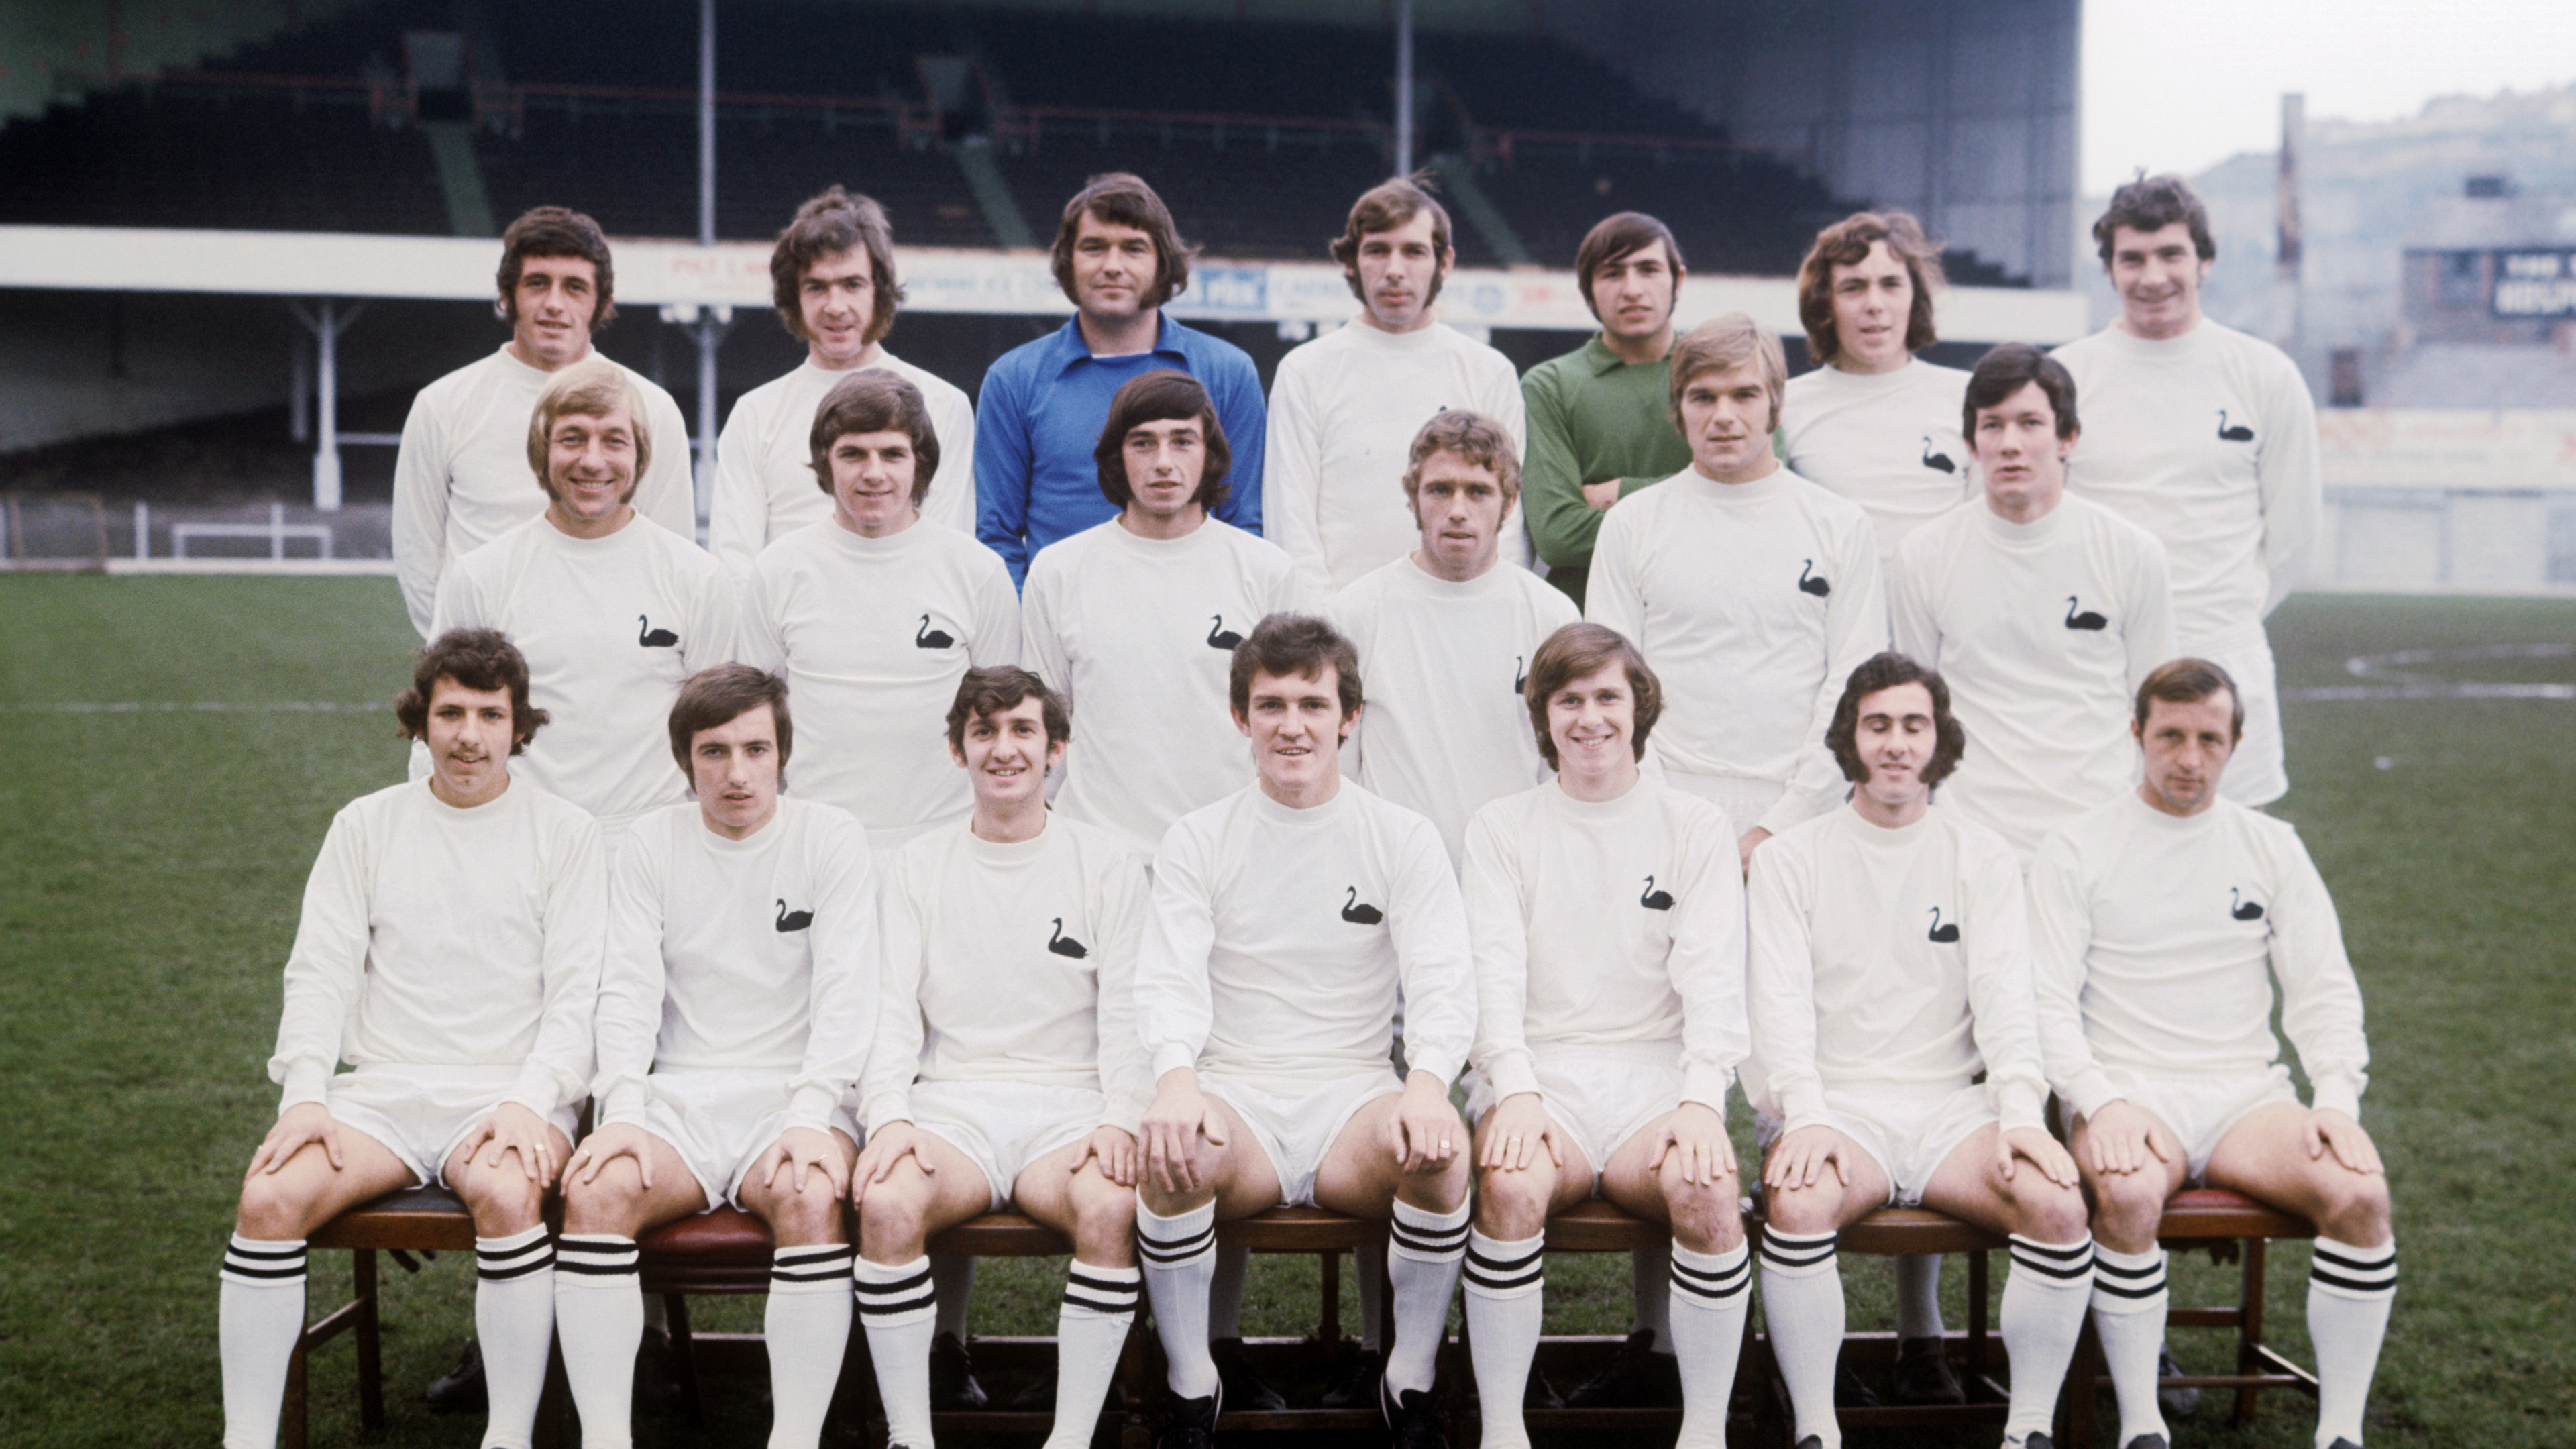 Swansea 1970 squad